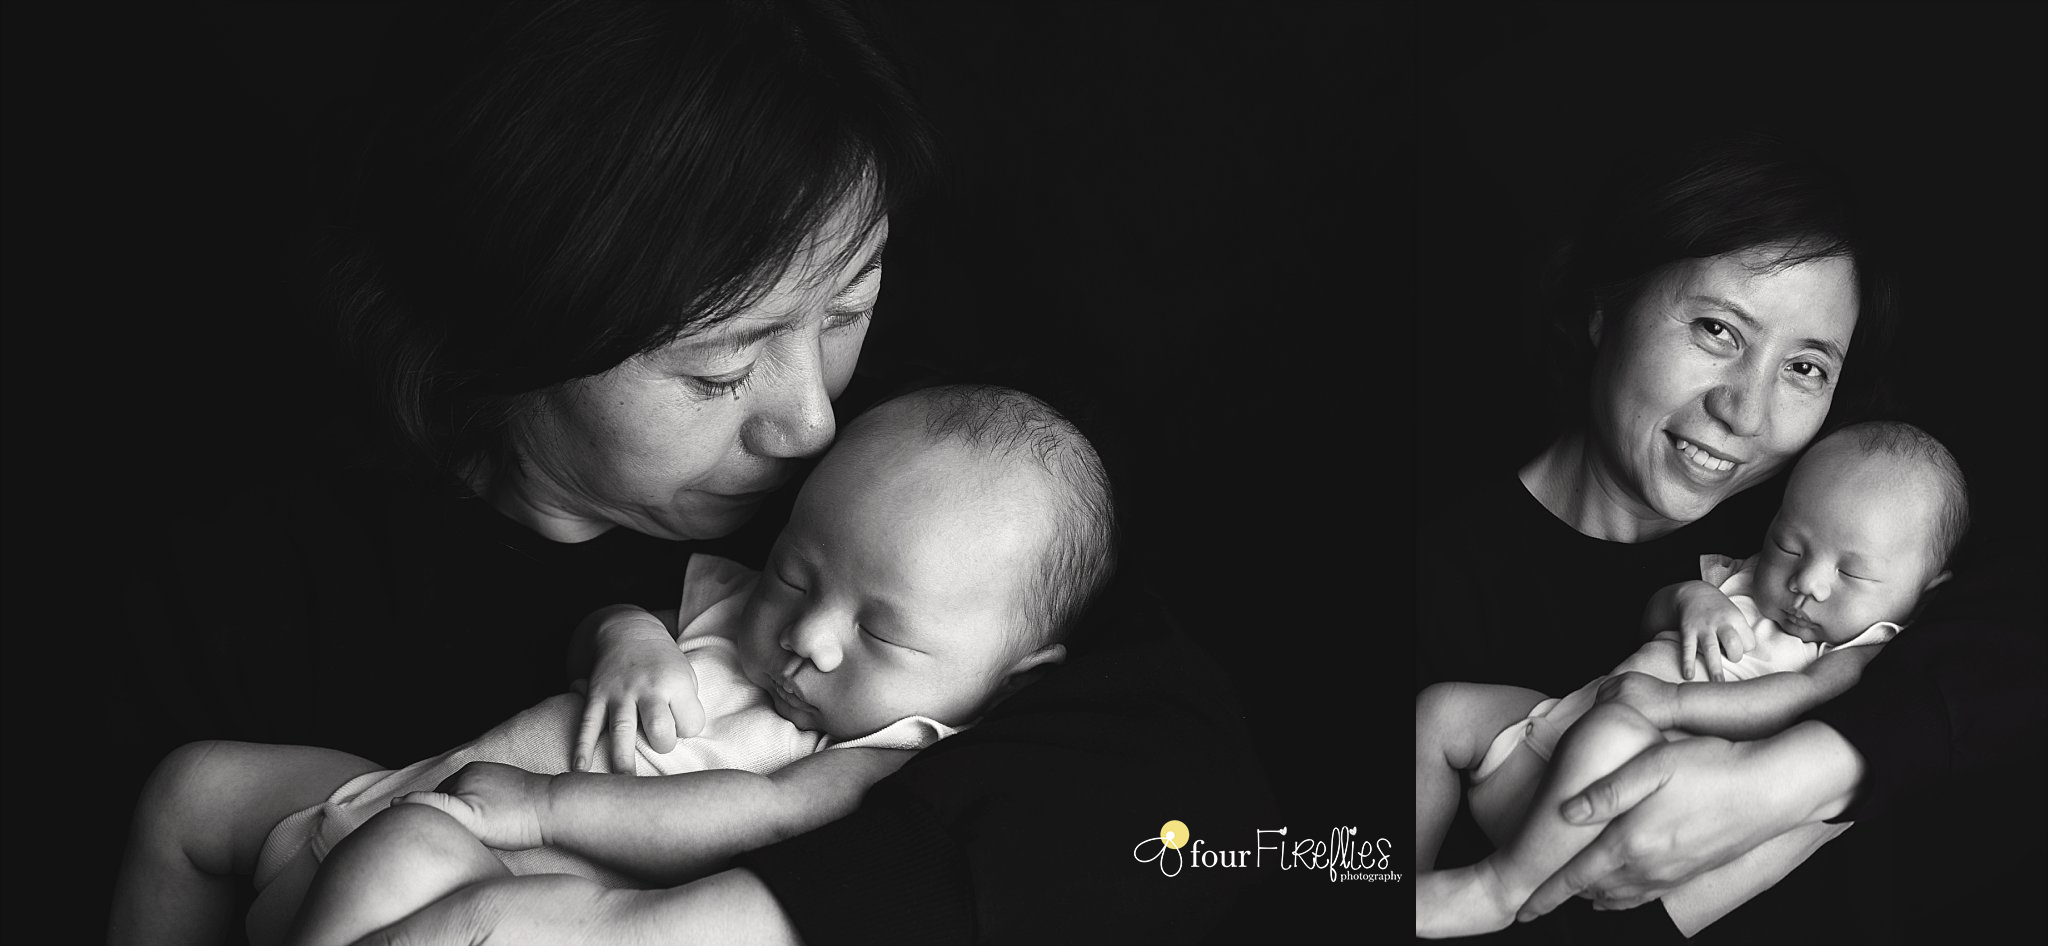 st-louis-newborn-photographer-baby-in-onsie-with-grandma-in-black-and-white.jpg